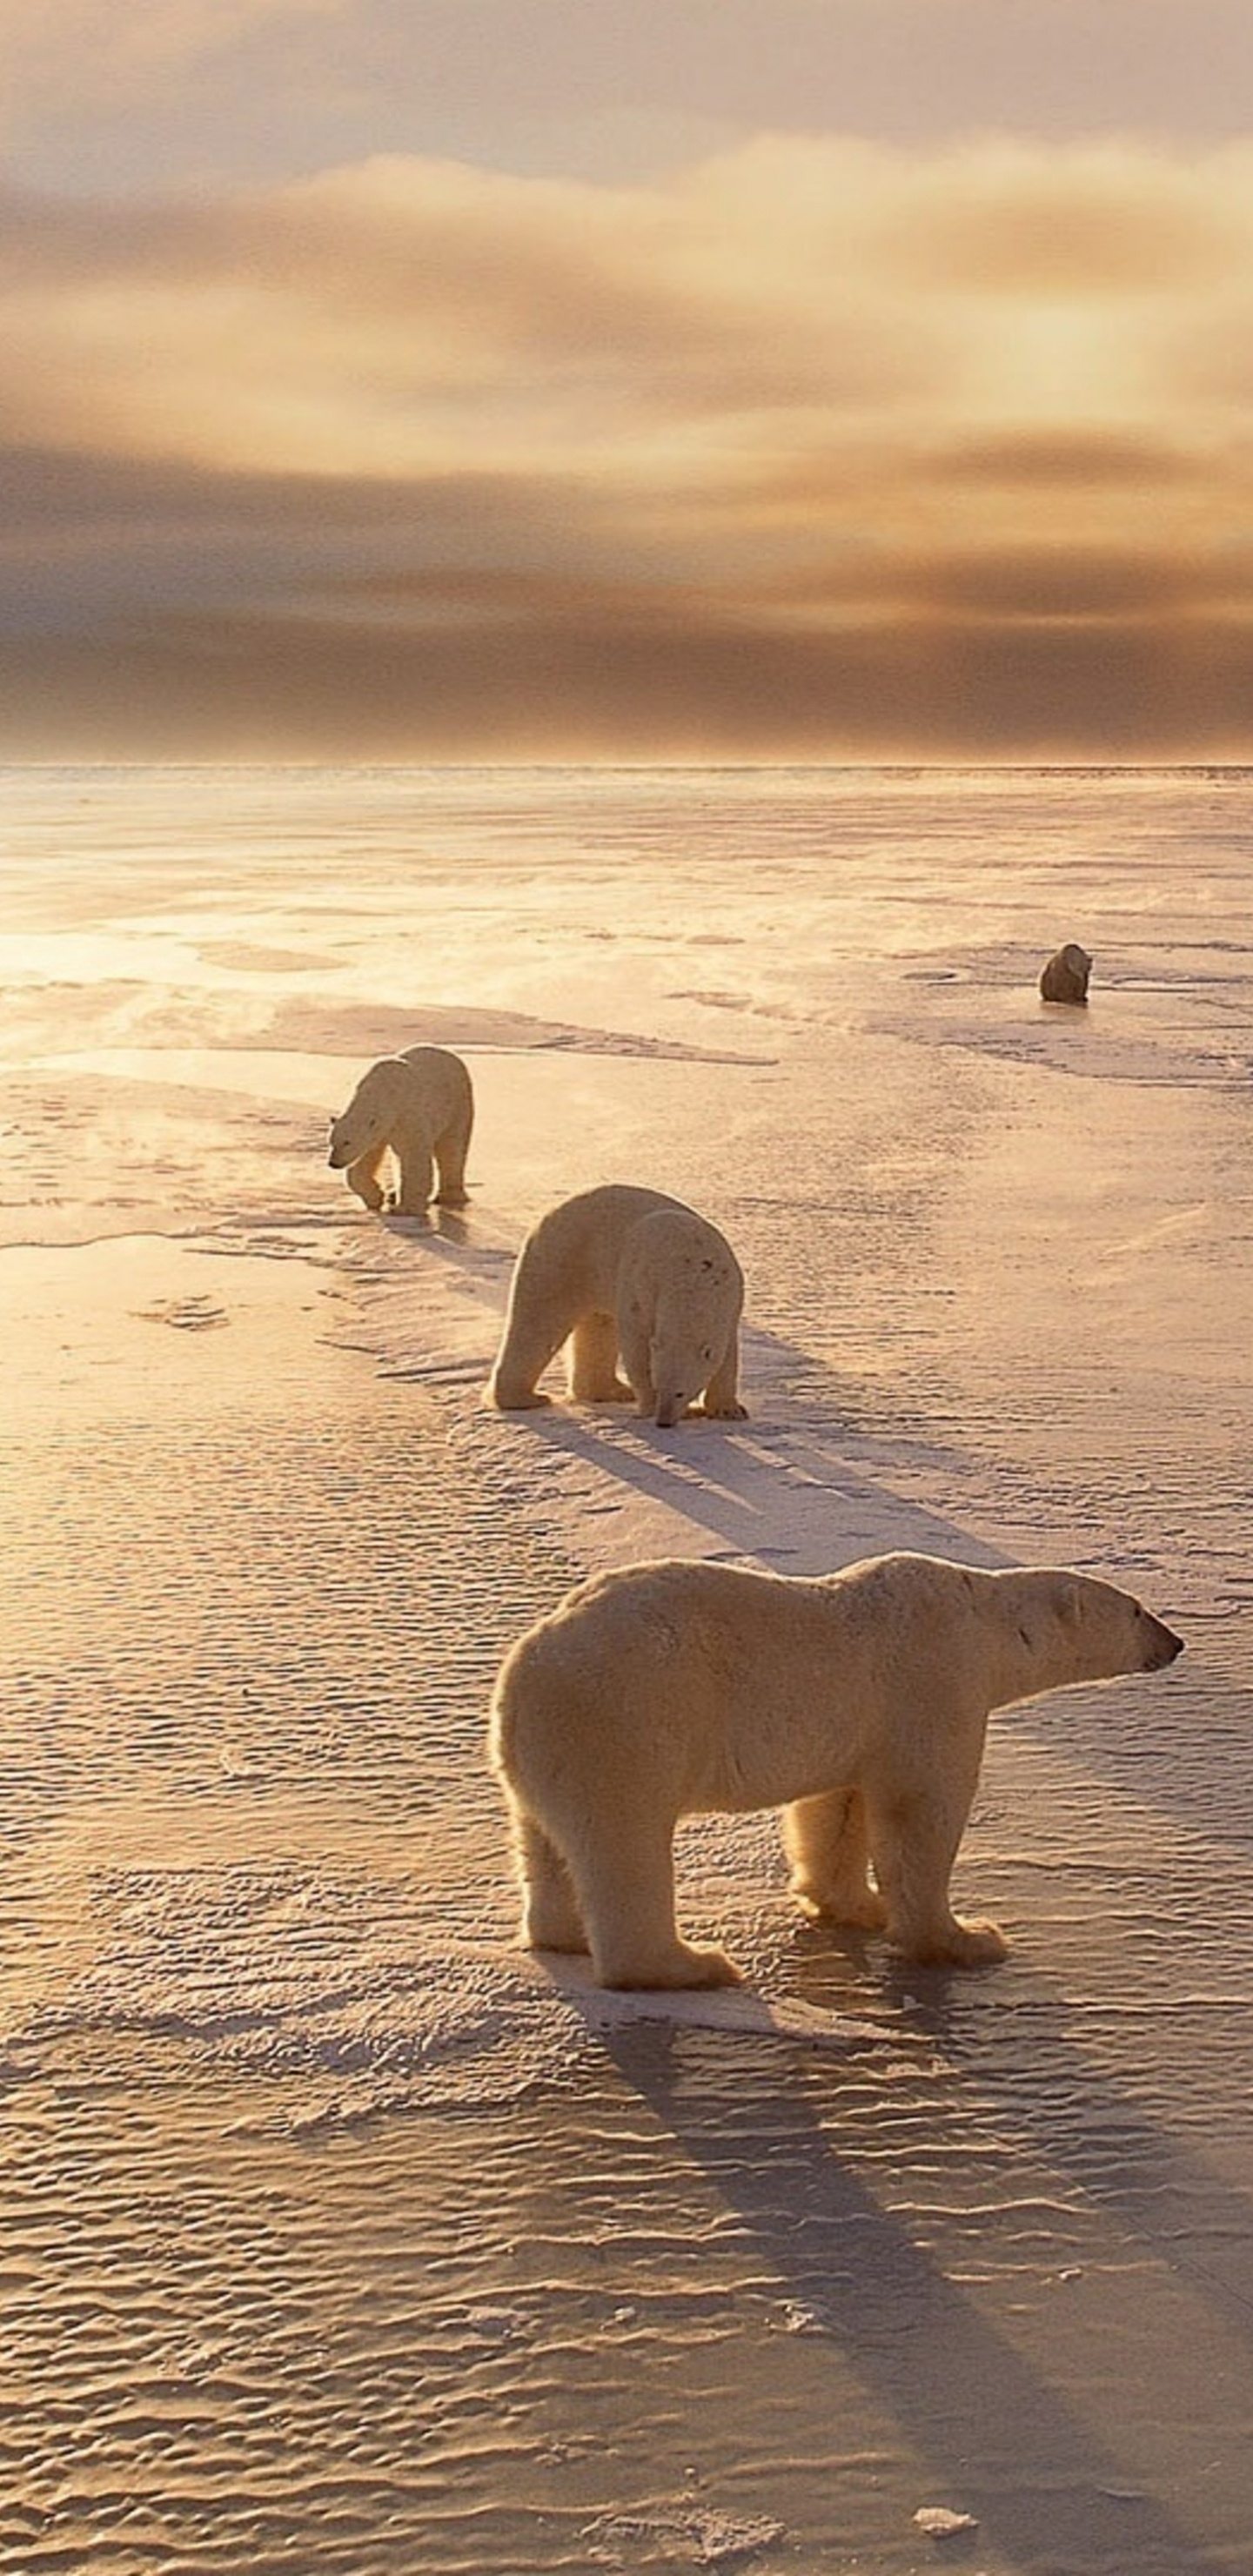 White Polar Bear on Brown Sand During Daytime. Wallpaper in 1440x2960 Resolution